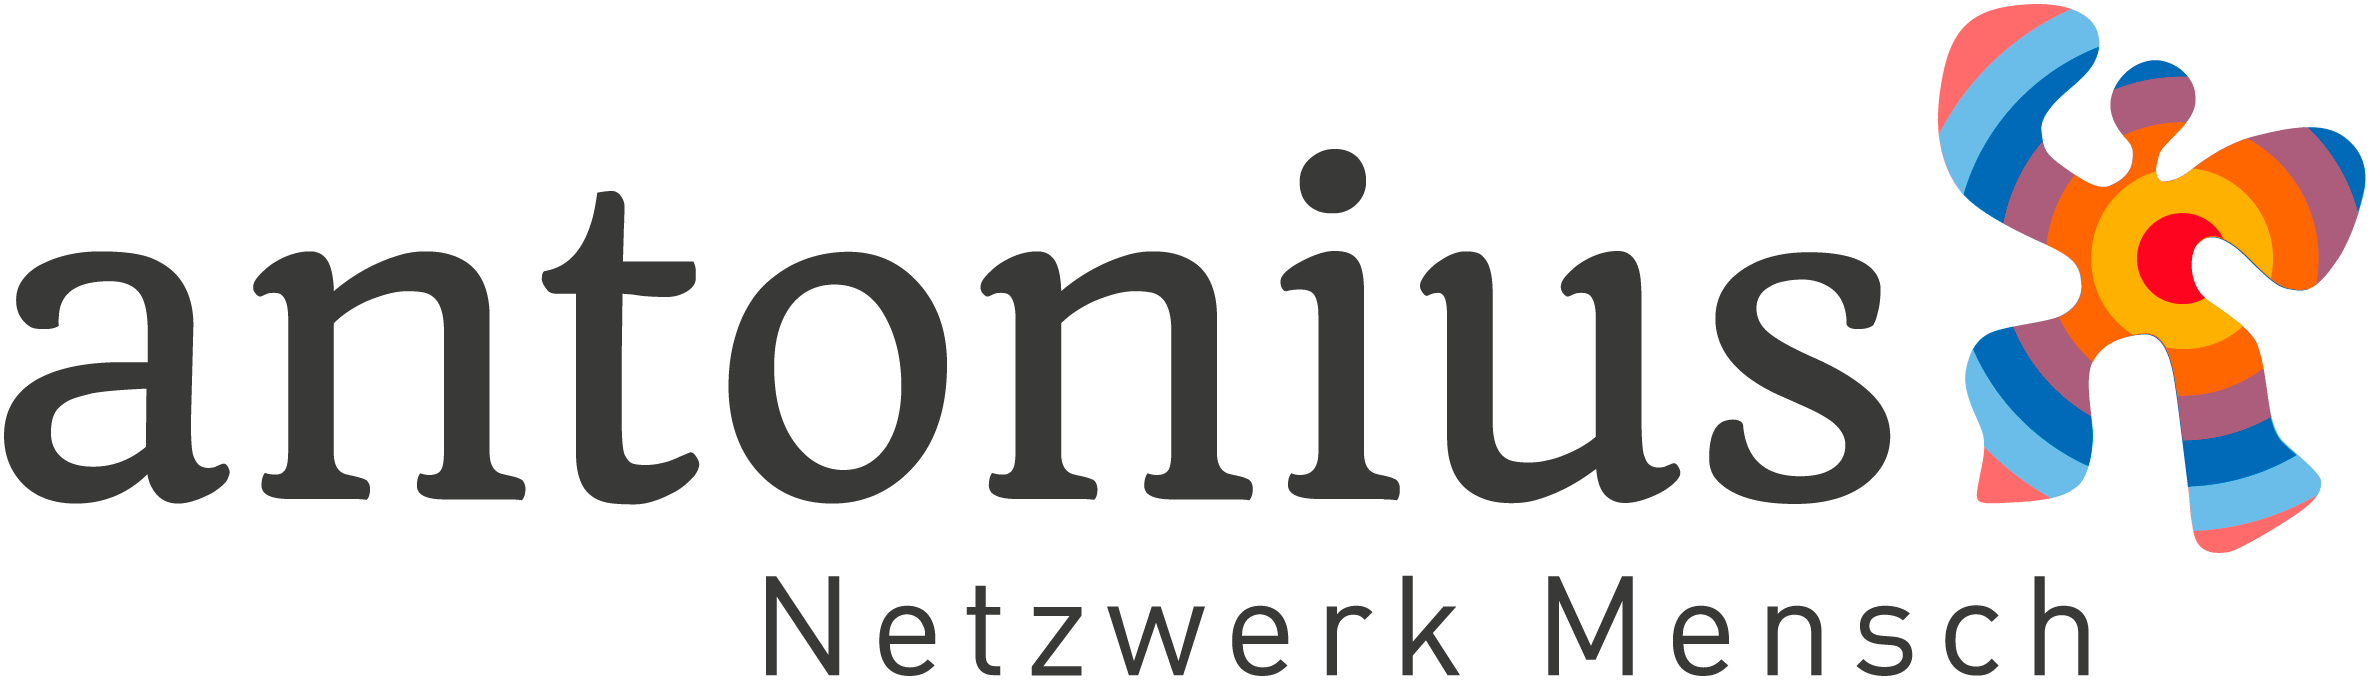 antonius netzwerk mensch logo